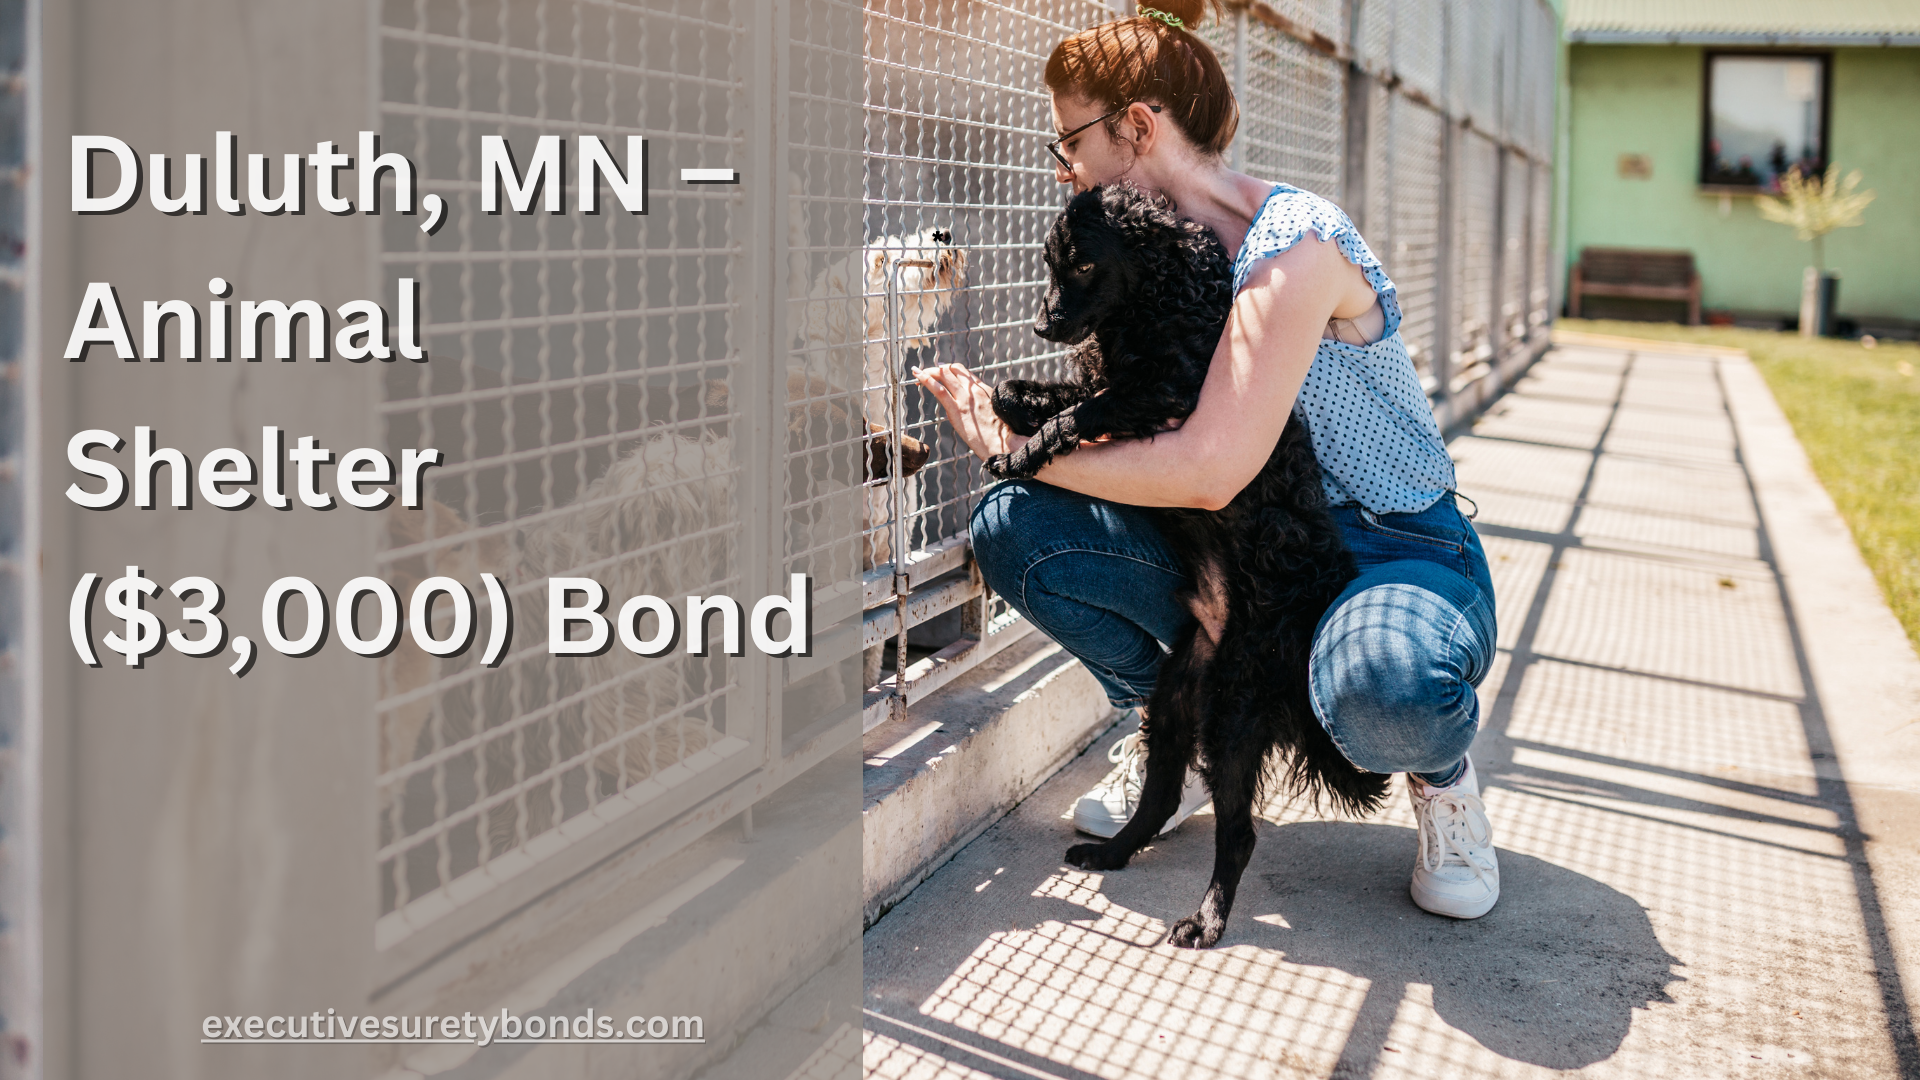 Duluth, MN – Animal Shelter ($3,000) Bond